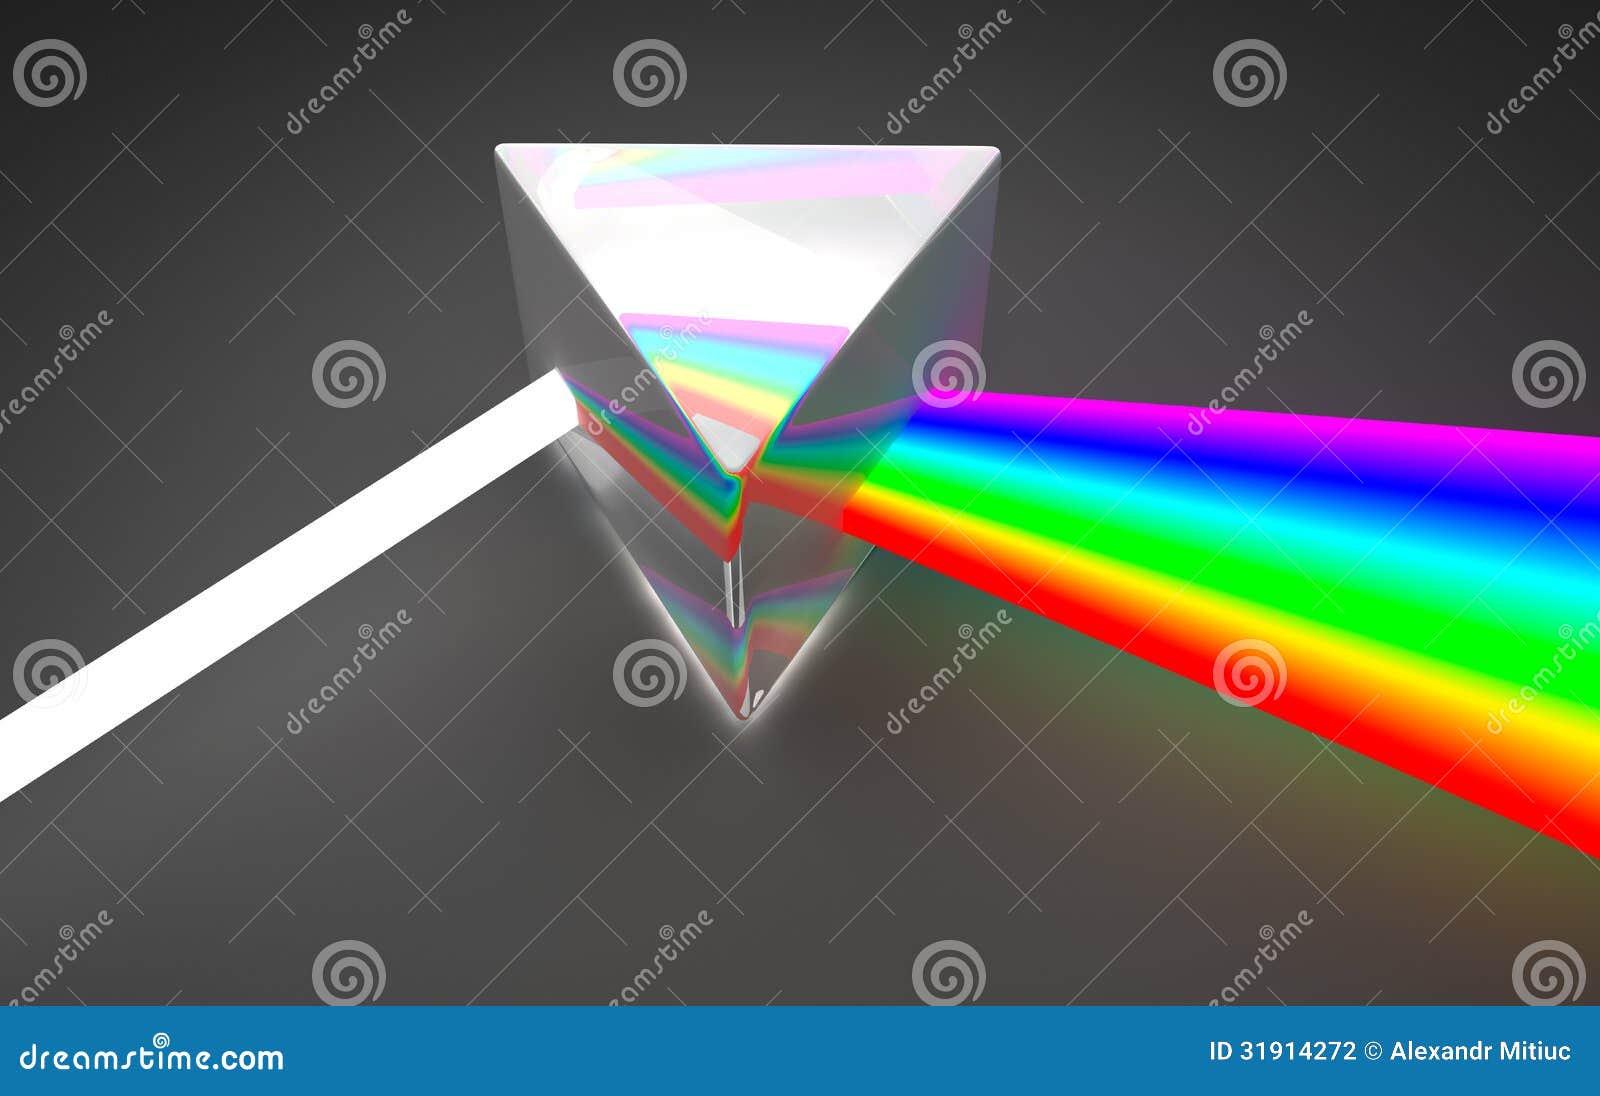 prism light spectrum dispersion